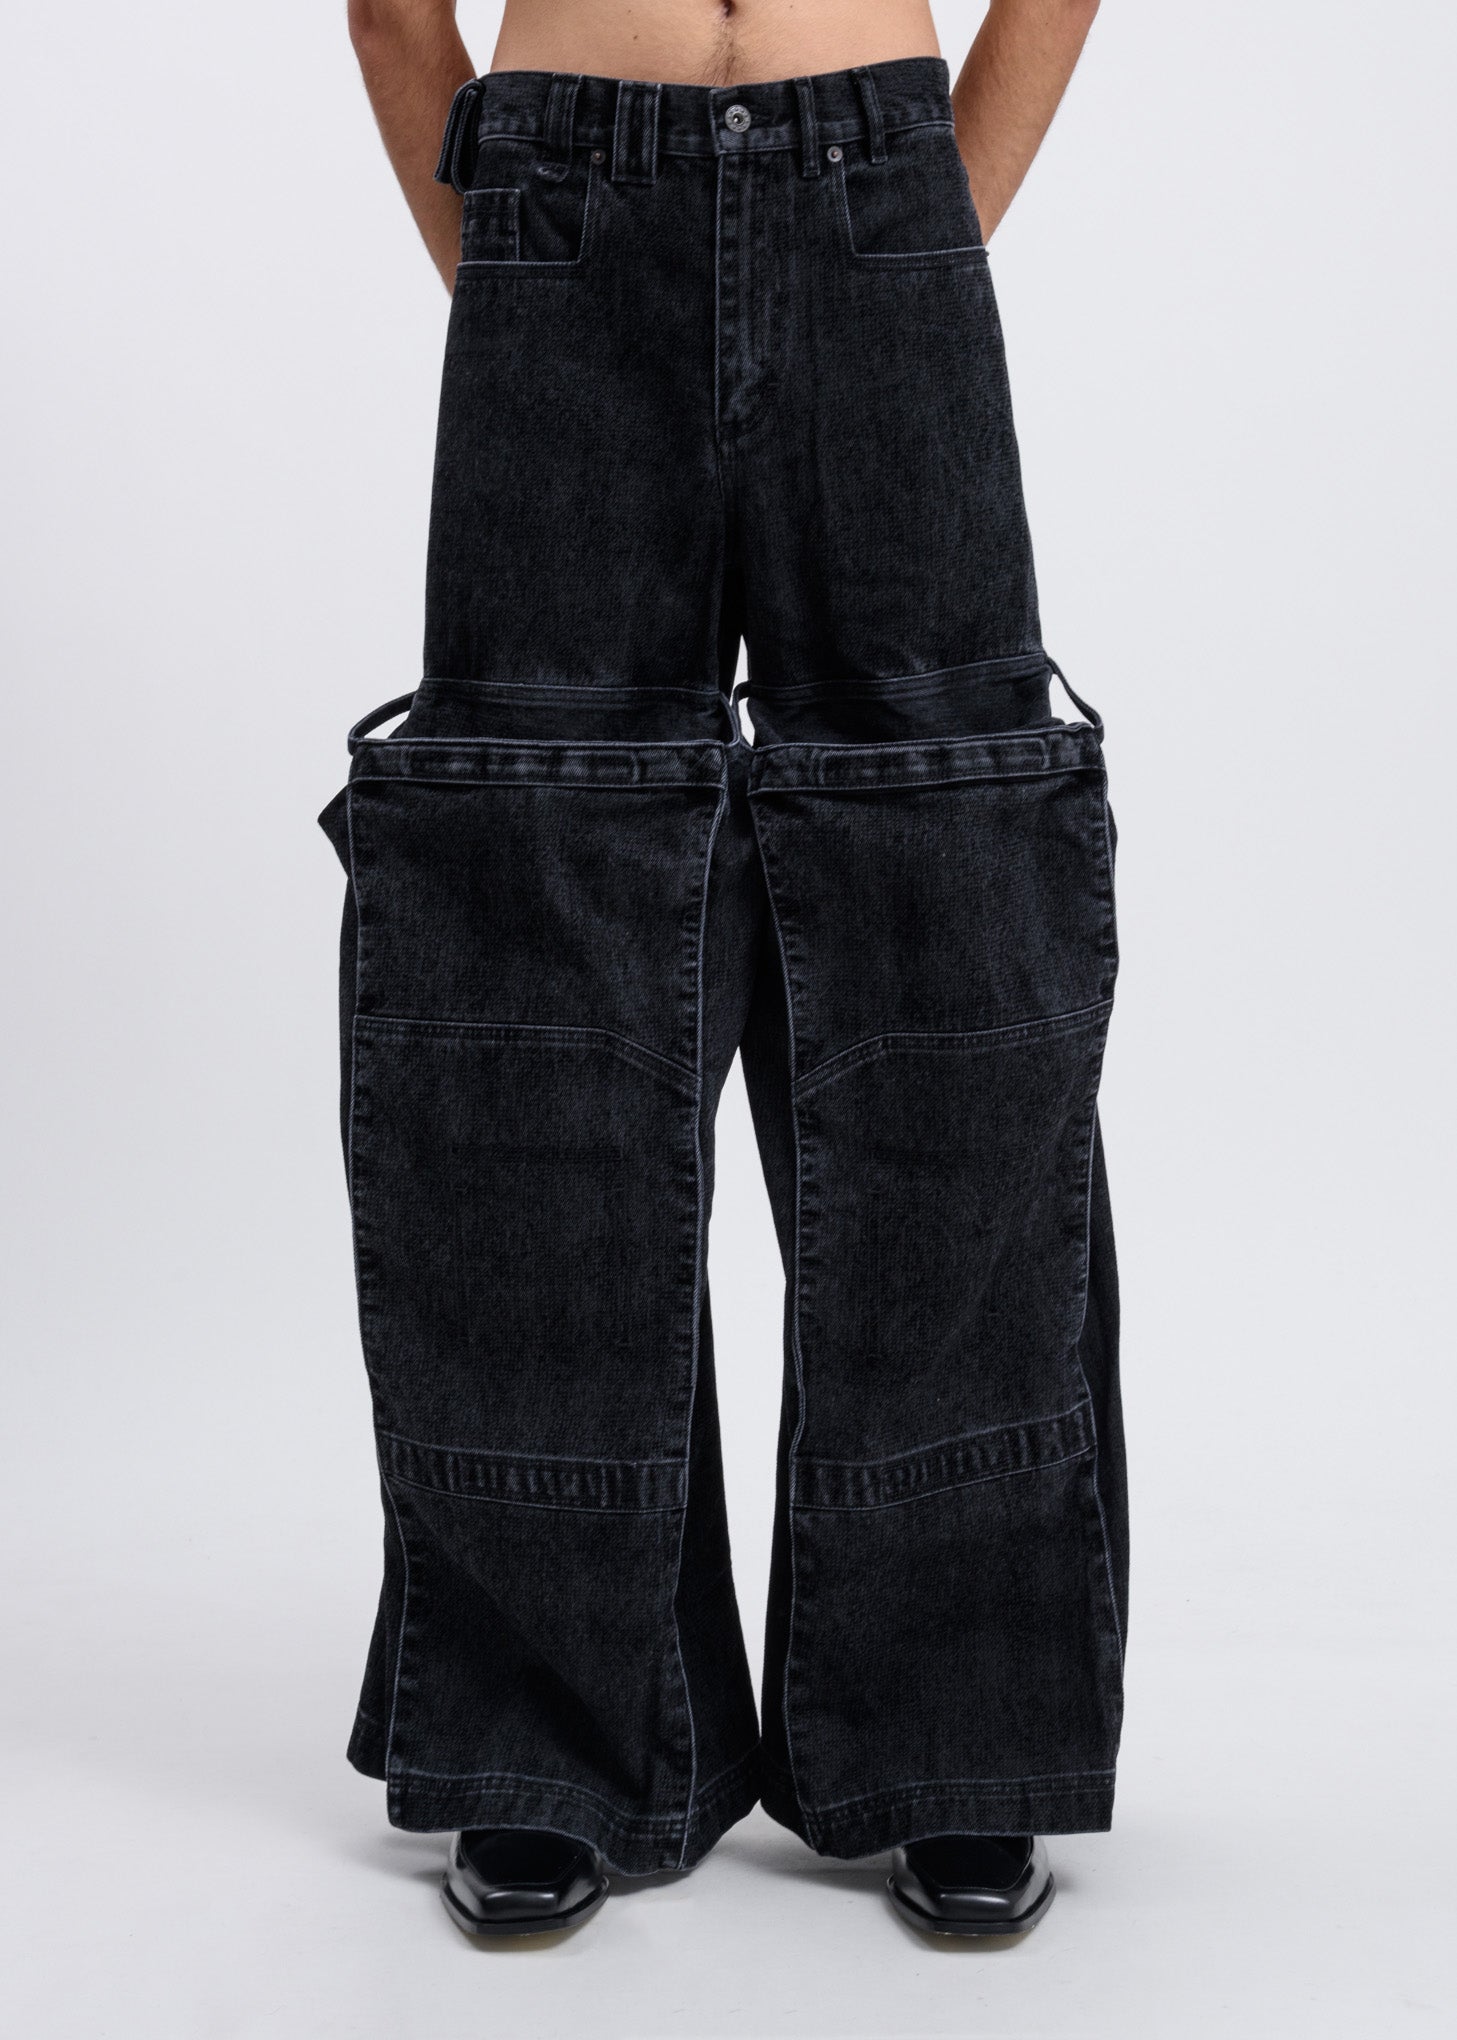 y/project pop up denim jeans-